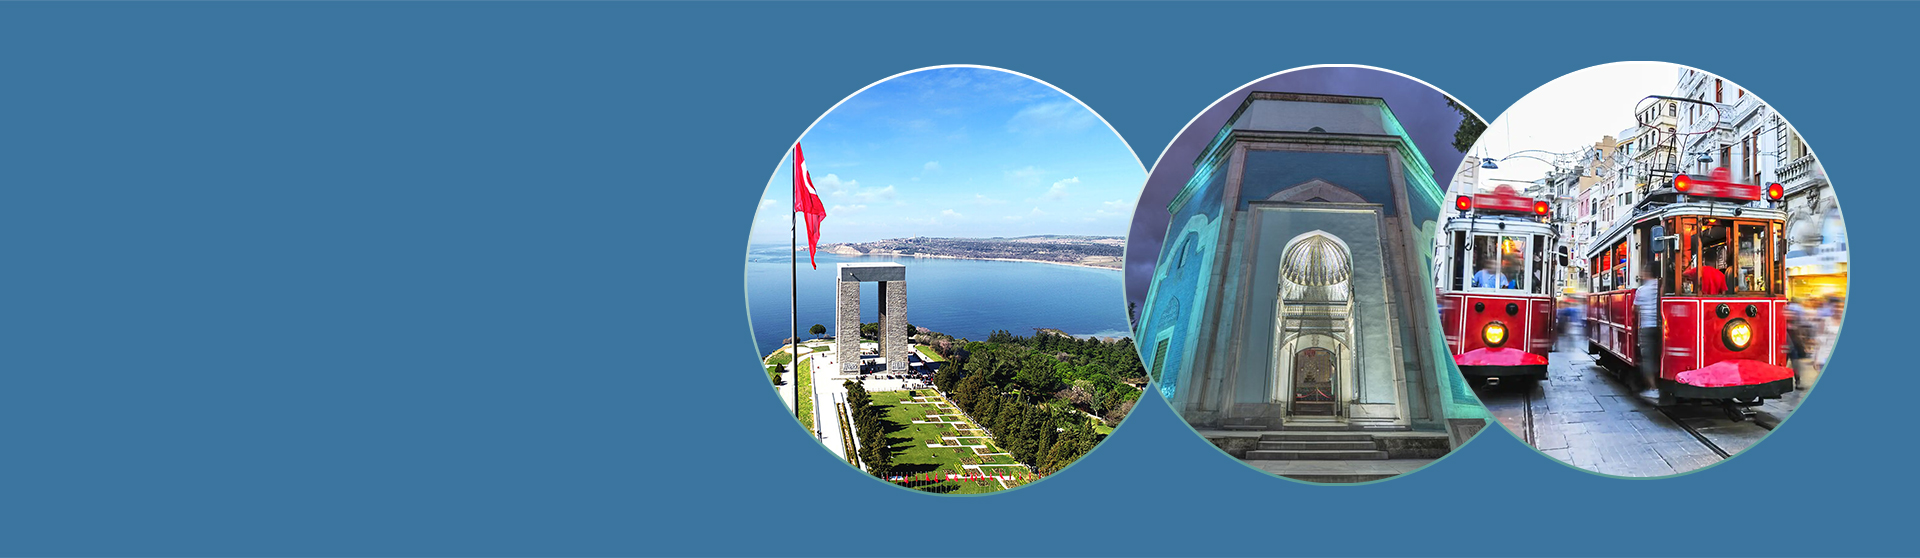 Marmara Tour Istanbul- Cankkale 3N4D